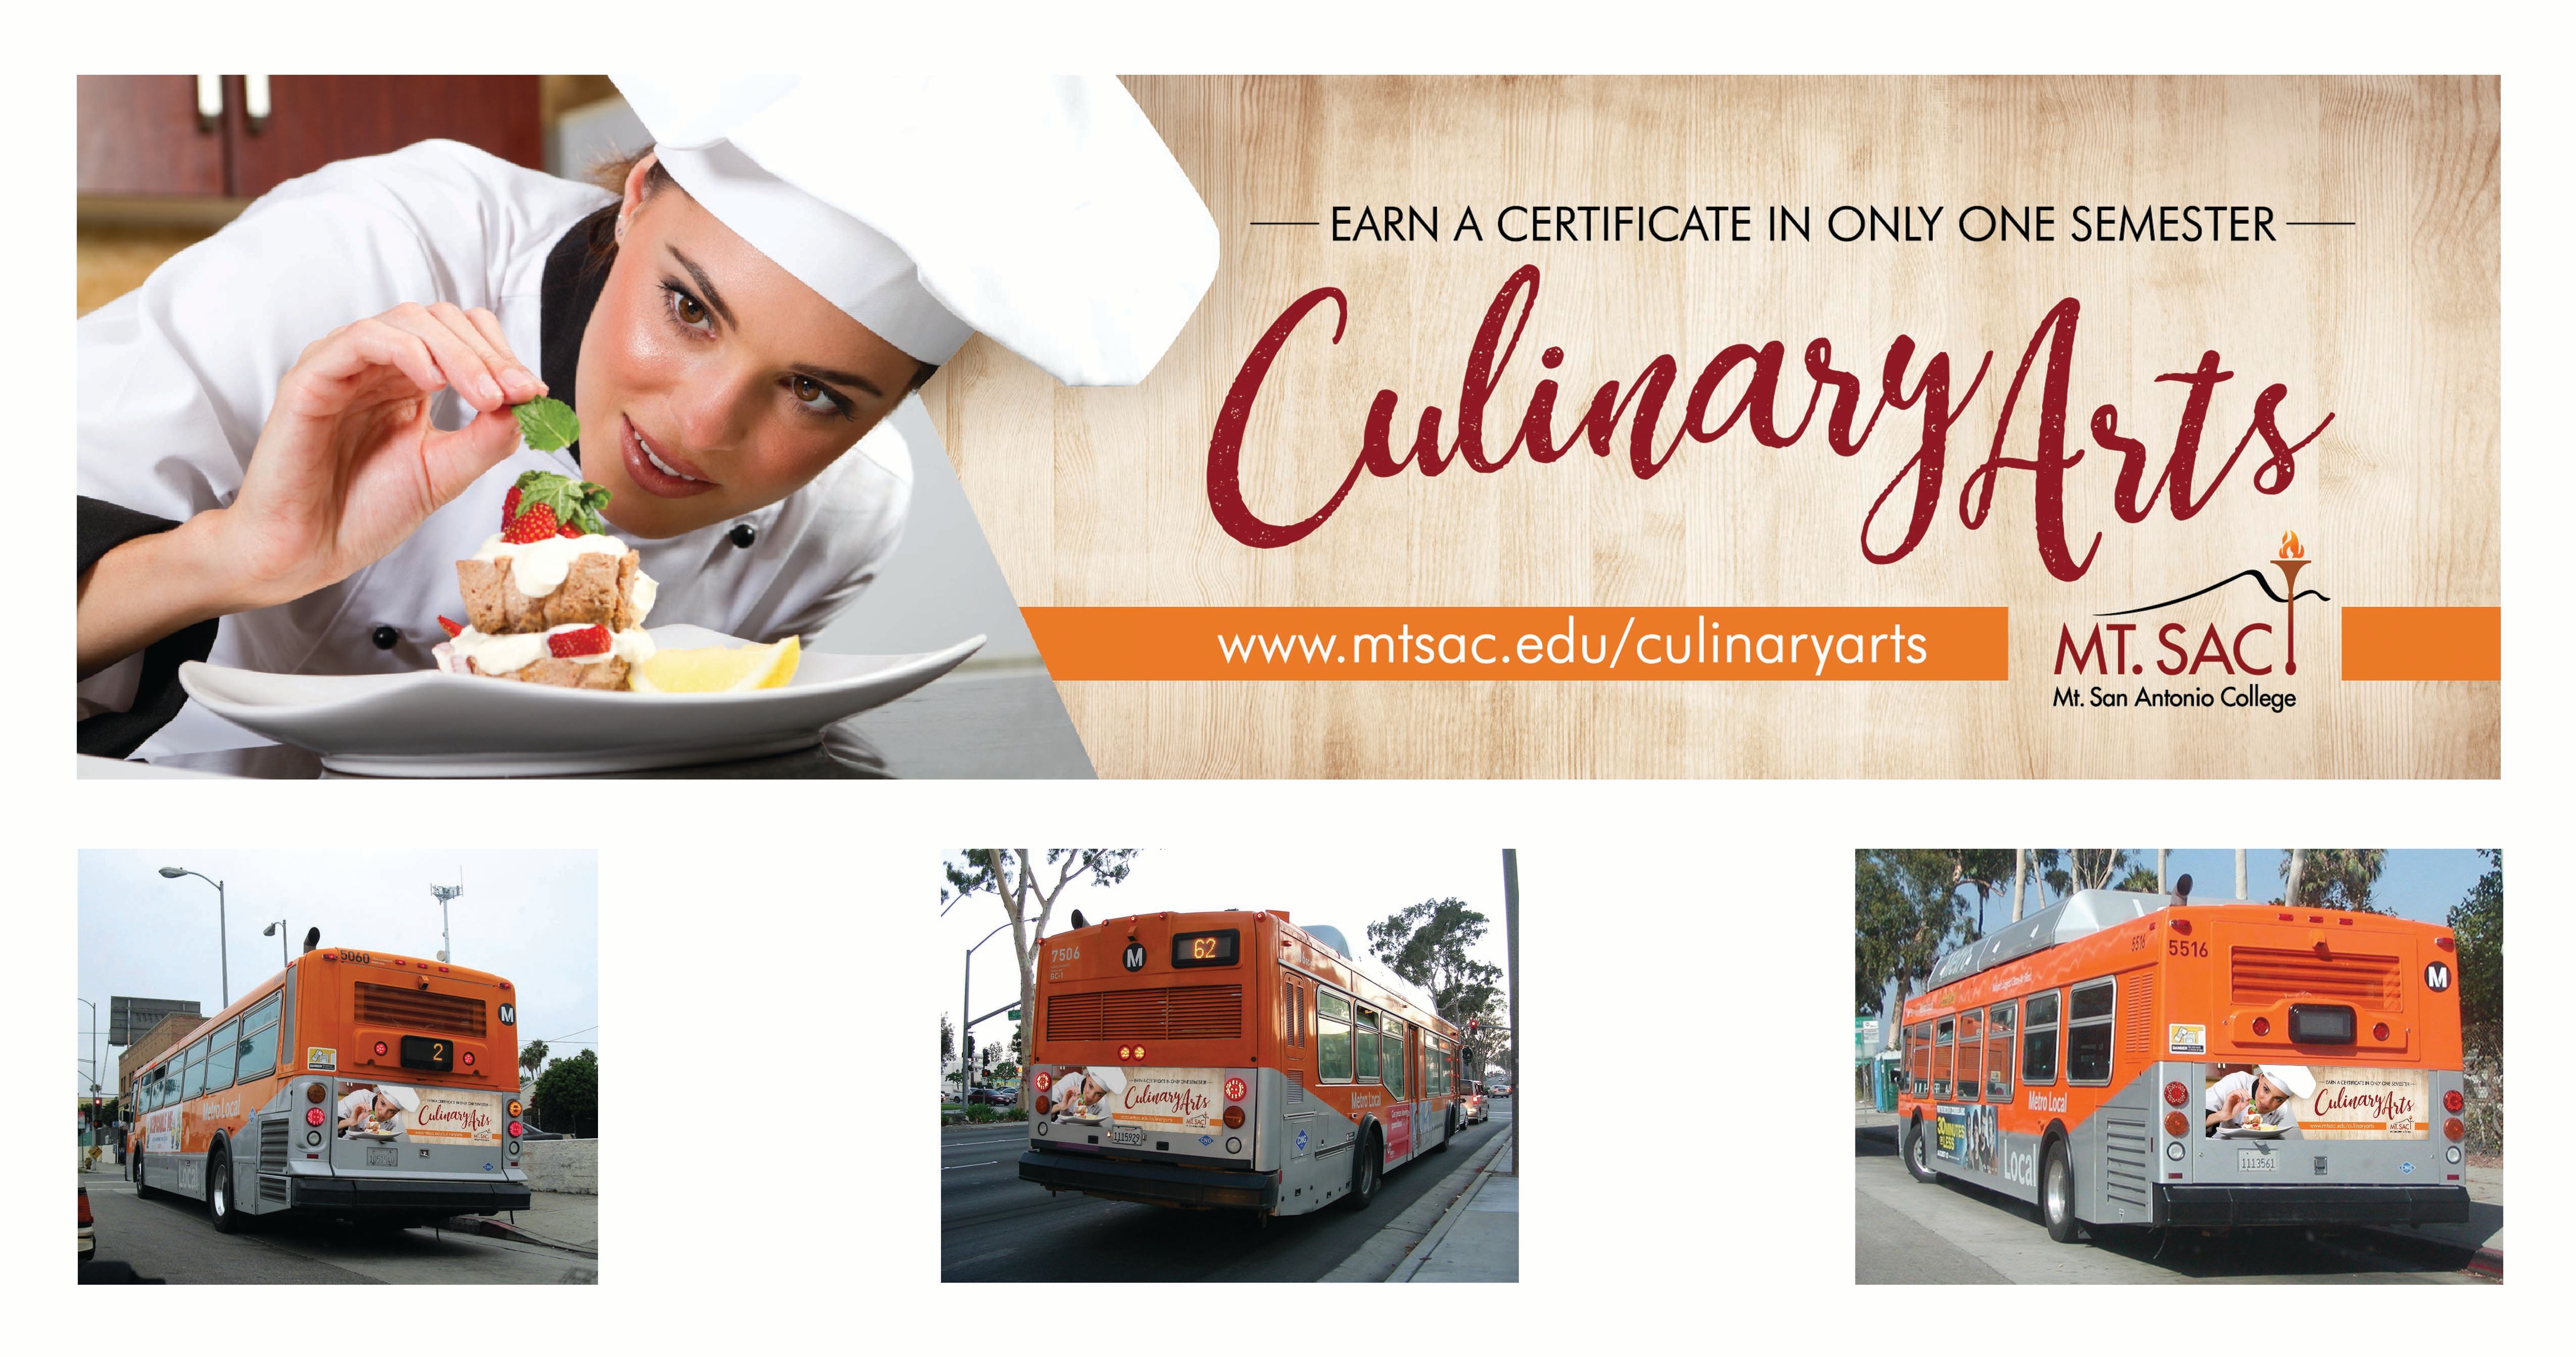 culinary arts bus advertisement